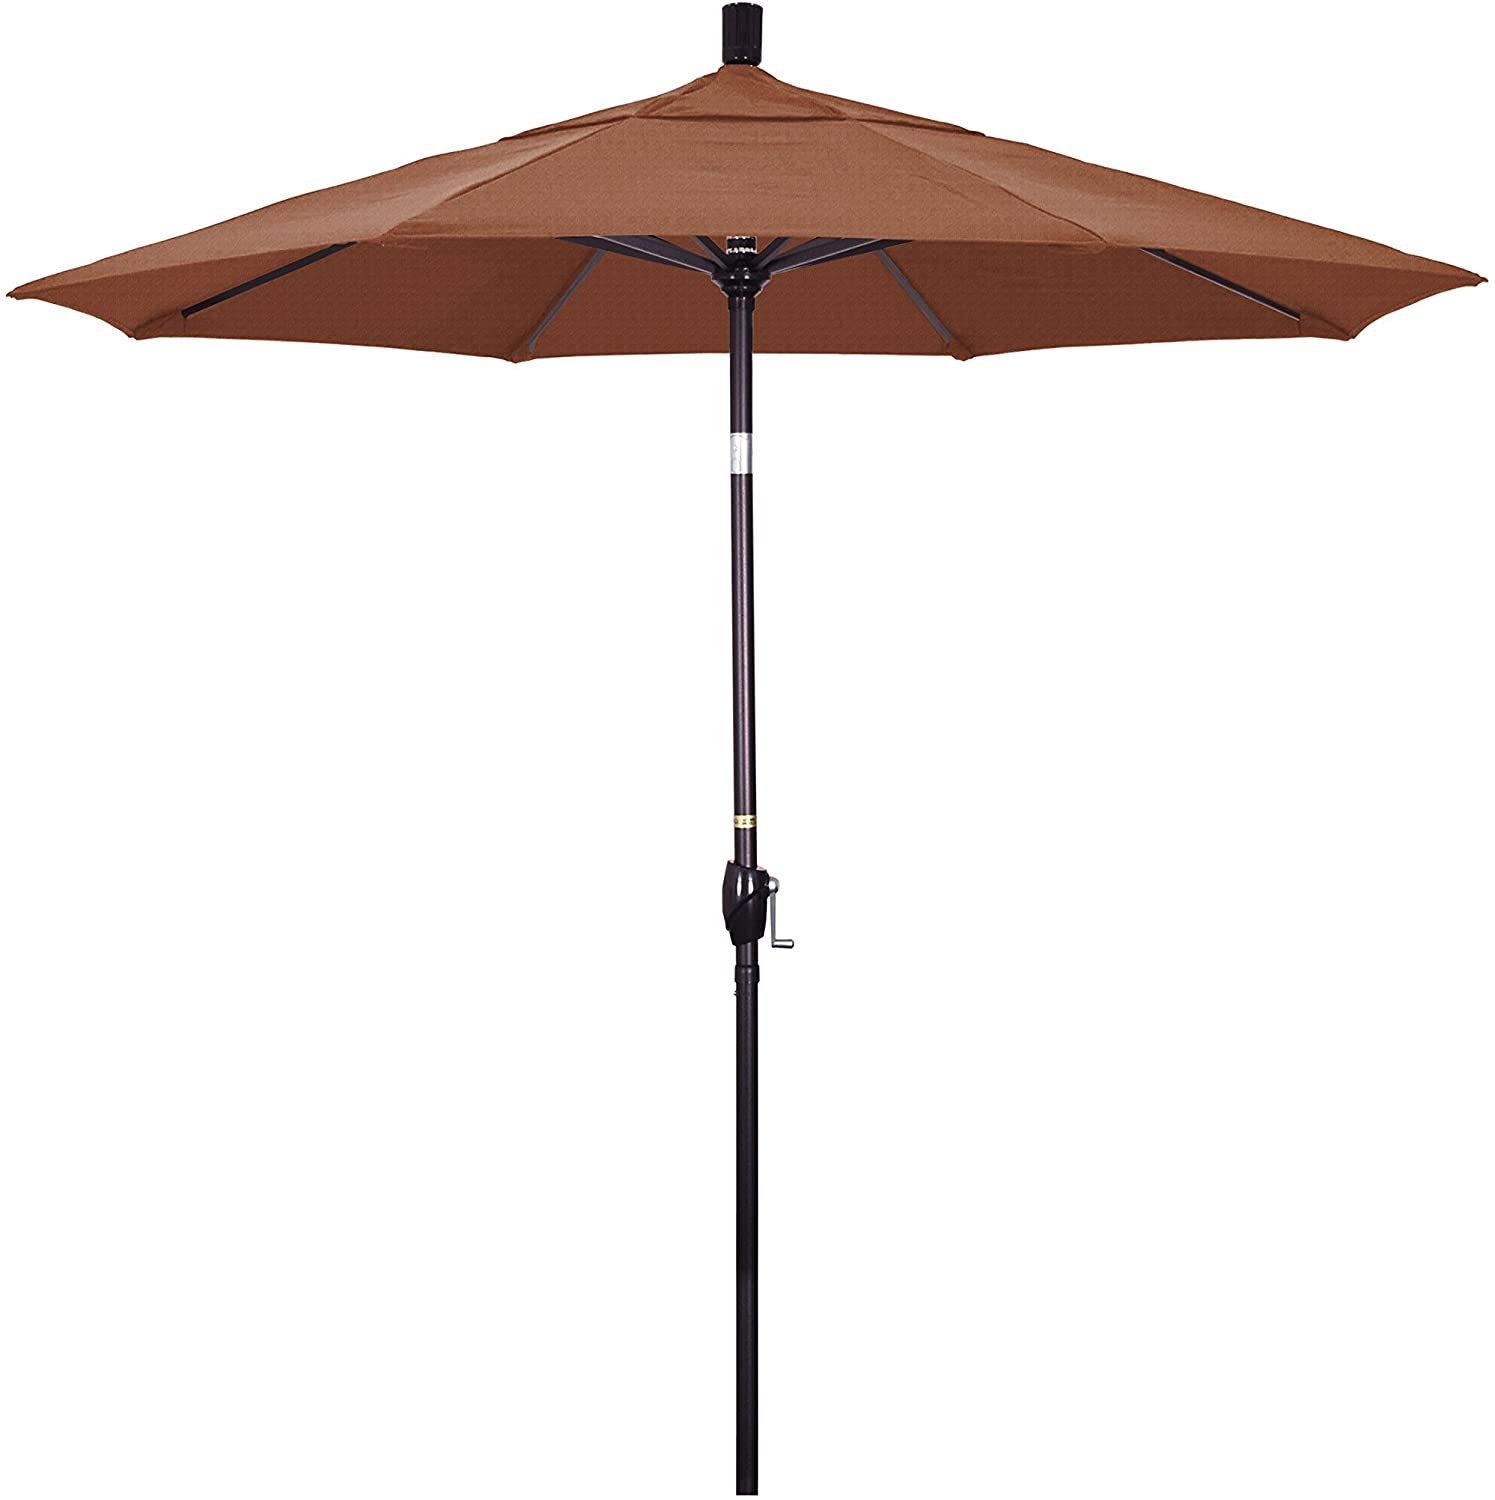 7 1/2 ft Market Umbrella with Bronze Aluminum Pole